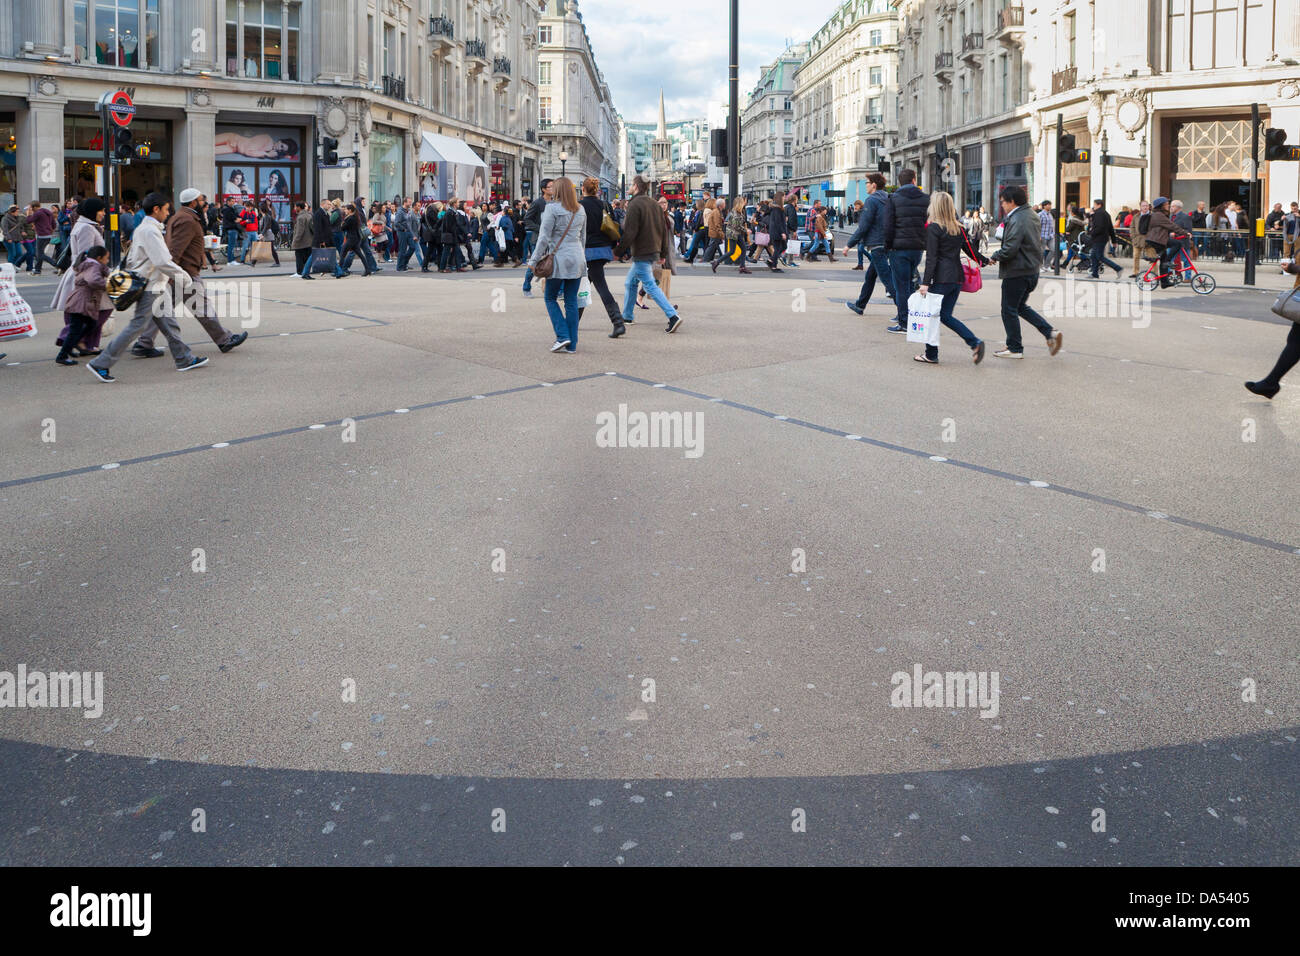 Diagonal pedestrian crossing at Oxford Circus, London, UK Stock Photo